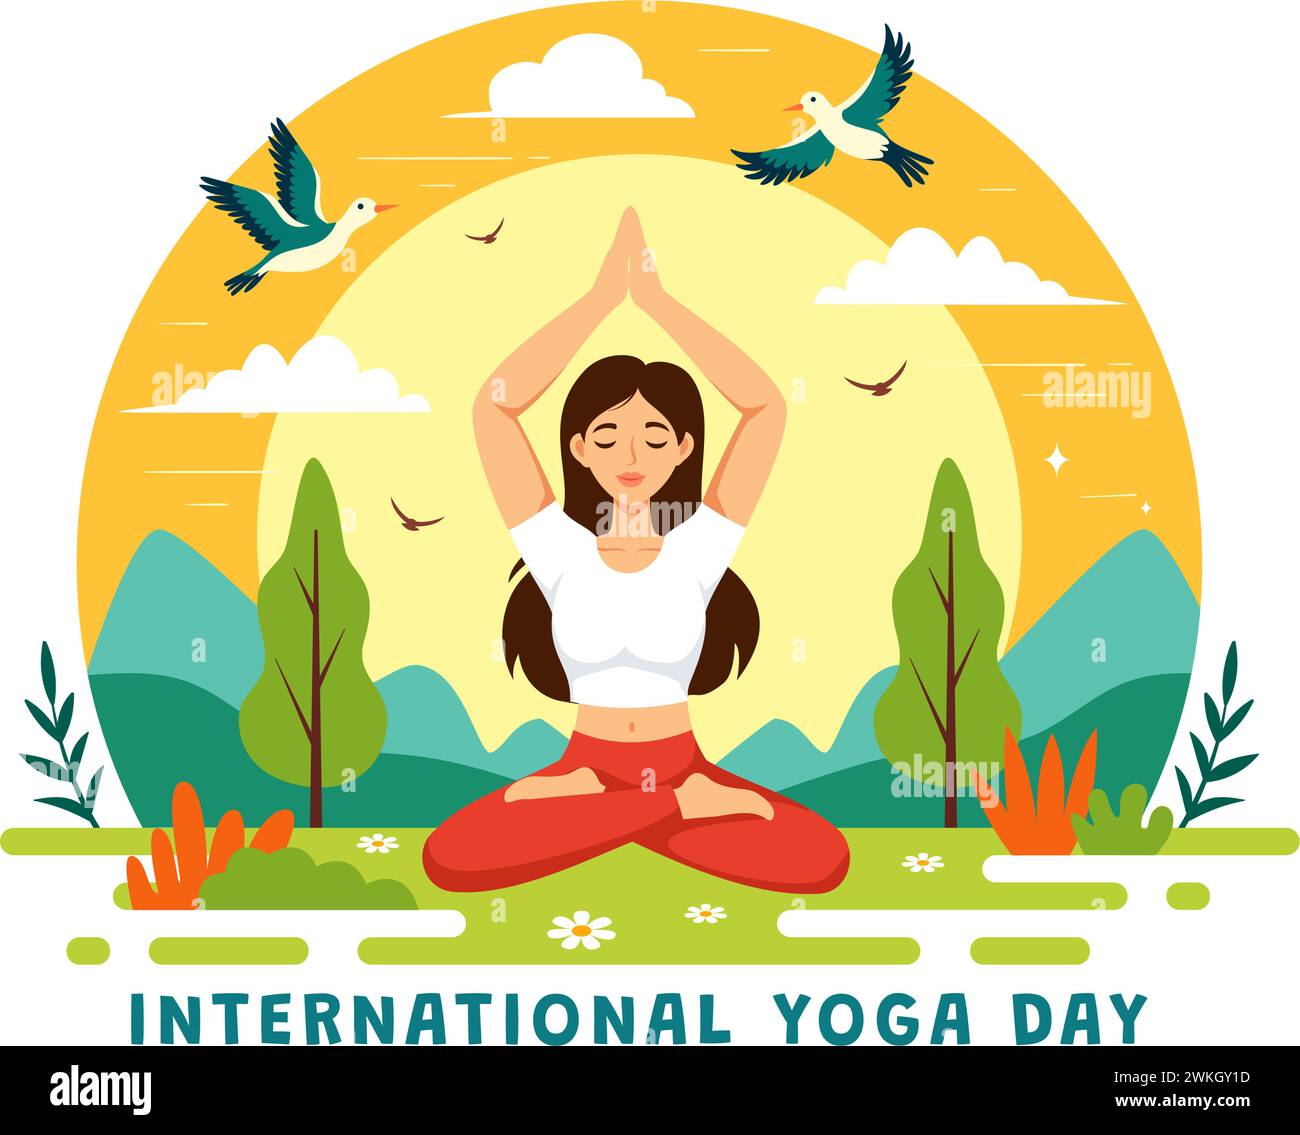 Internationaler Yoga-Tag Vektor-Illustration am 21. Juni mit Frau, die Körperhaltung Praxis oder Meditation im Healthcare Flat Cartoon Hintergrund tut Stock Vektor